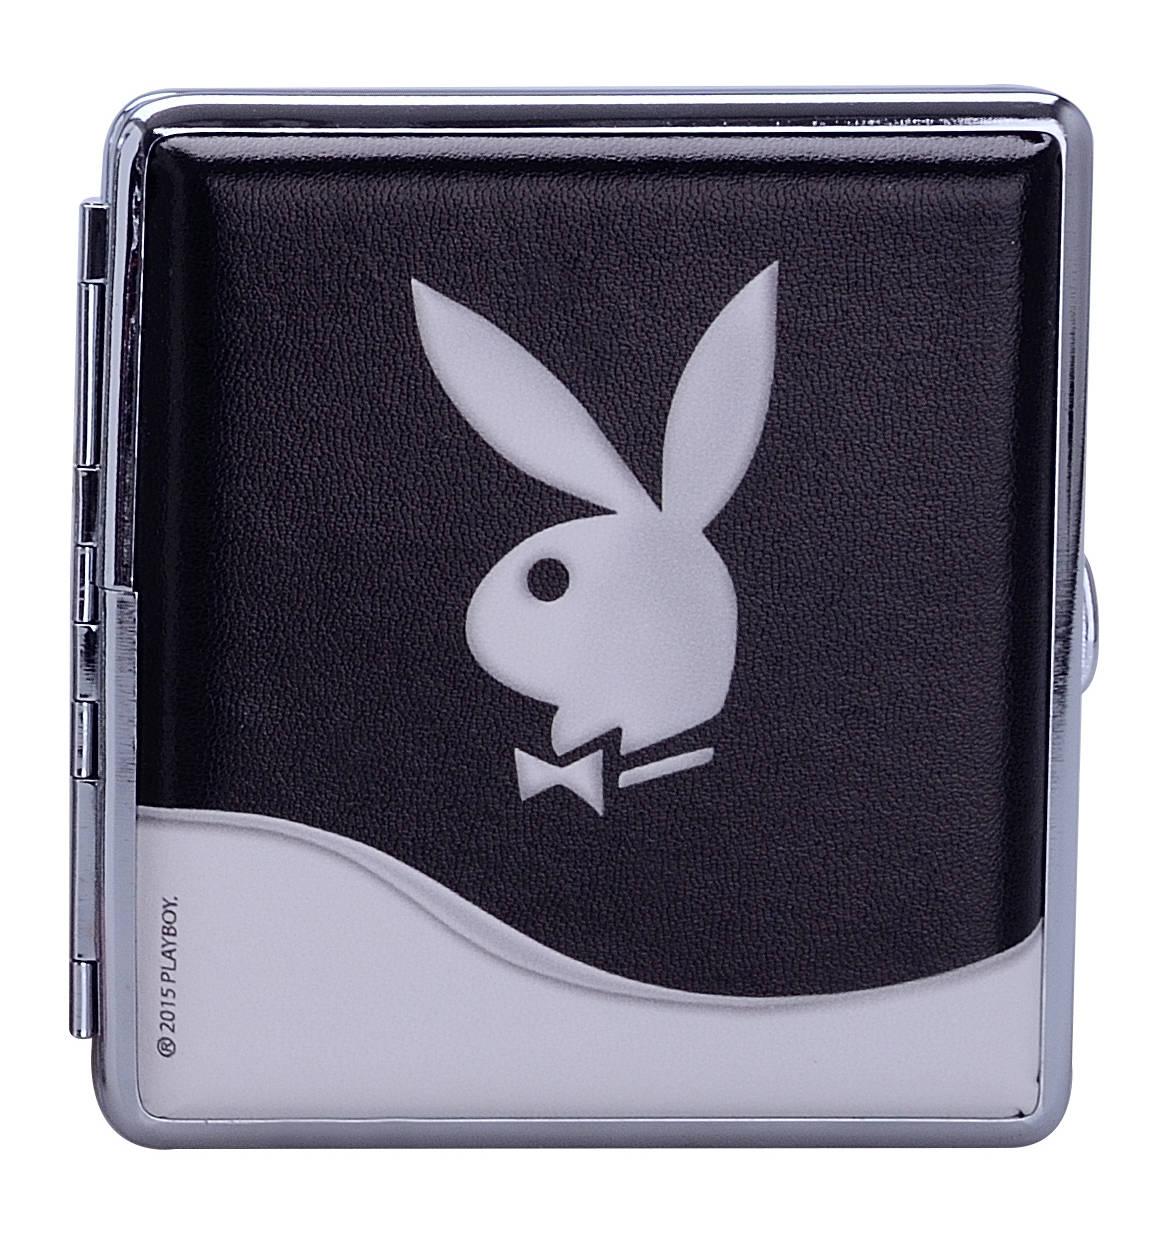 Zigaretten Etui Box Dose Case Playboy Edelstahl Chrom Design  zum Aktionspreis 